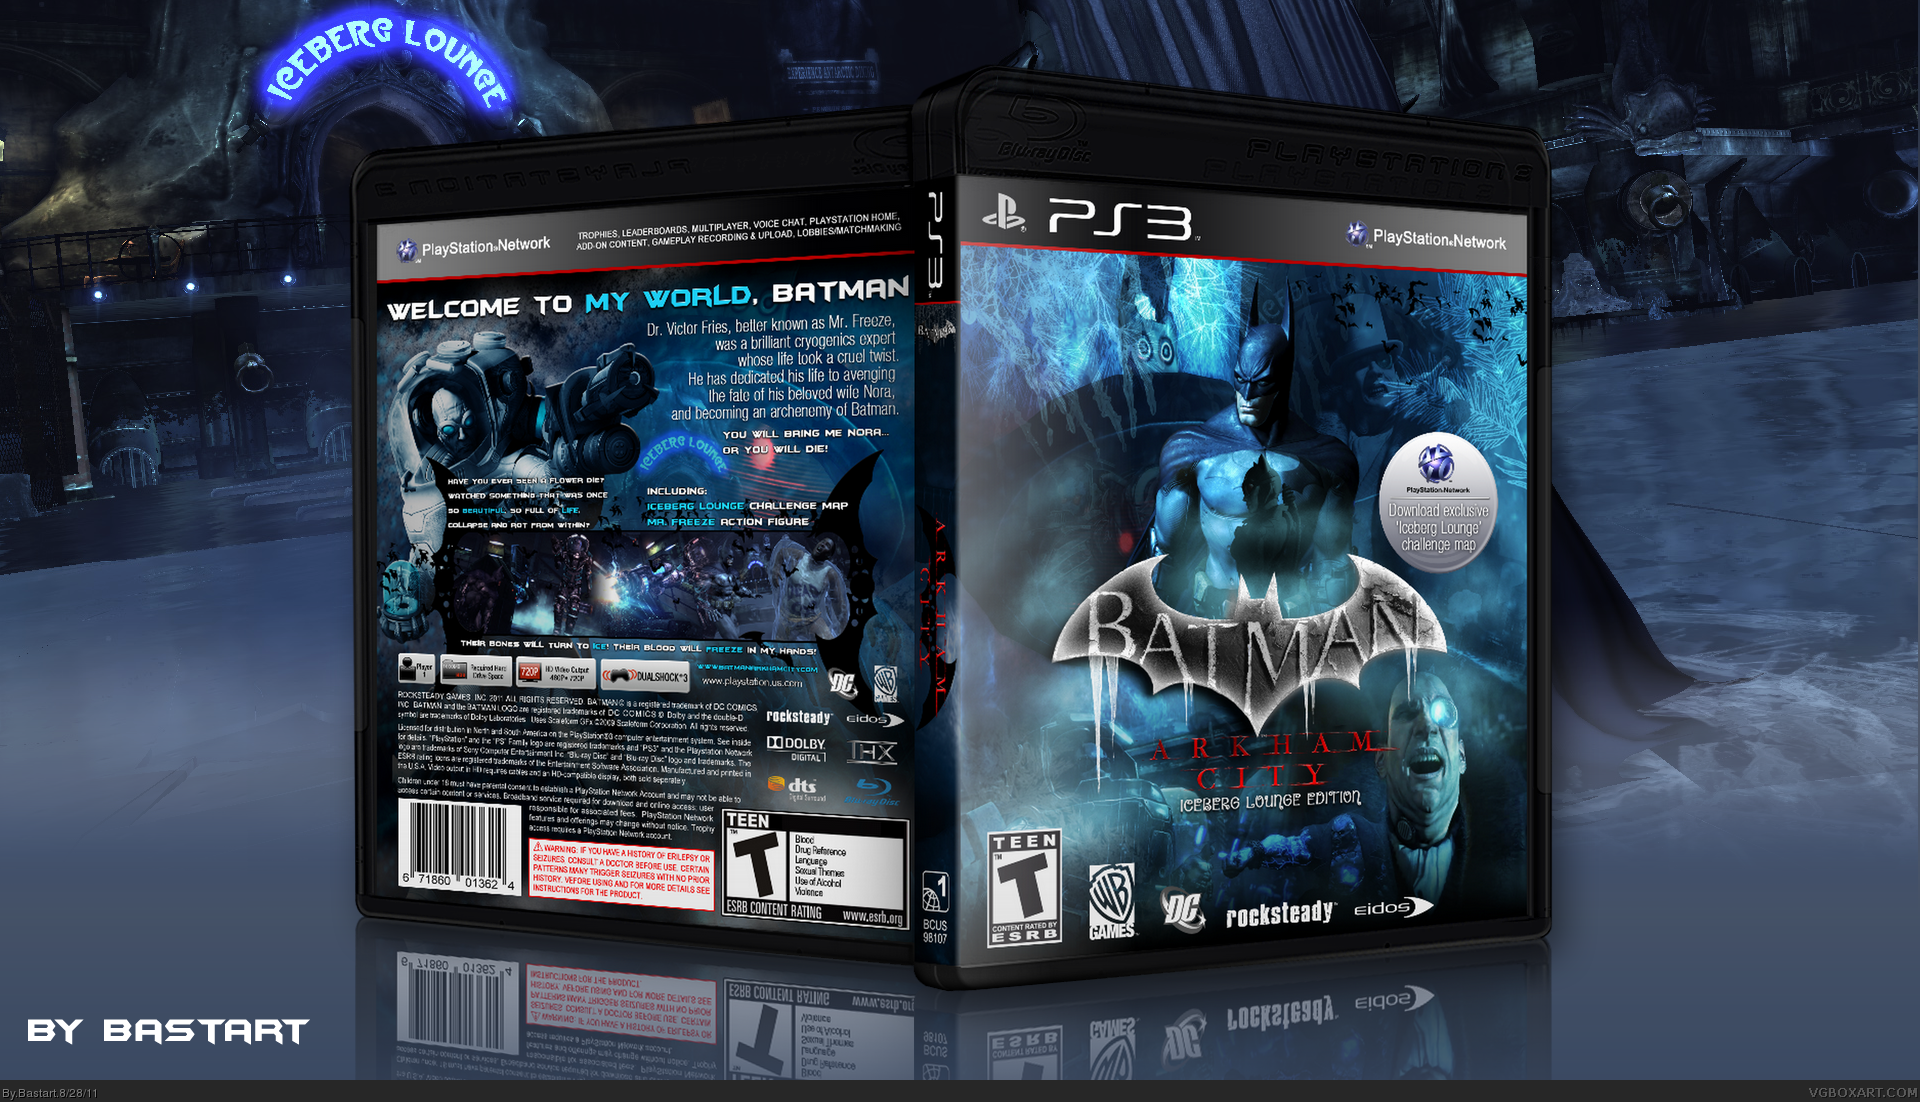 Batman Arkham City: Iceberg Lounge Edition box cover